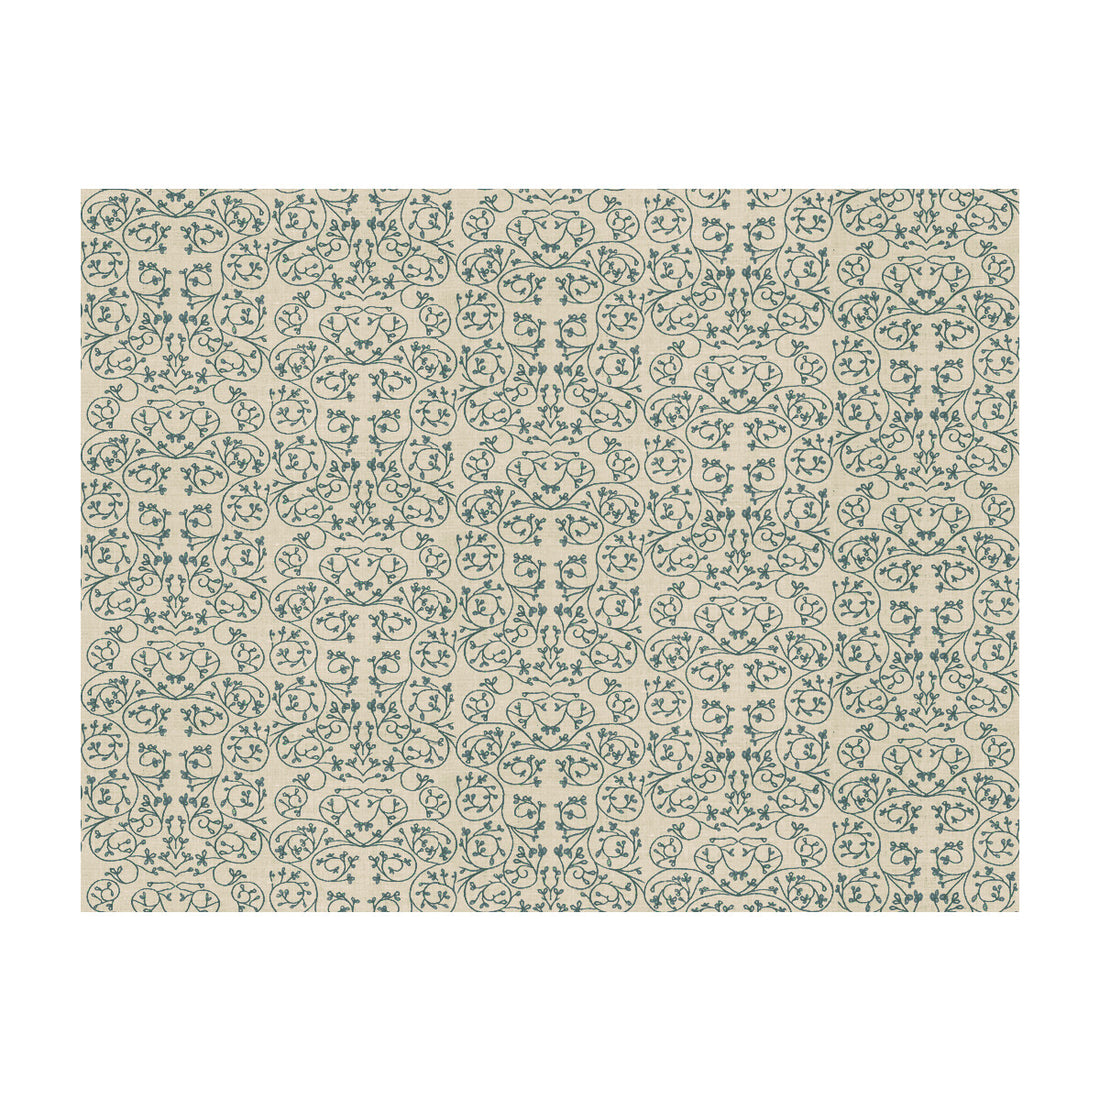 Garden fabric in cornflower color - pattern GWF-3511.5.0 - by Lee Jofa Modern in the Allegra Hicks Garden collection